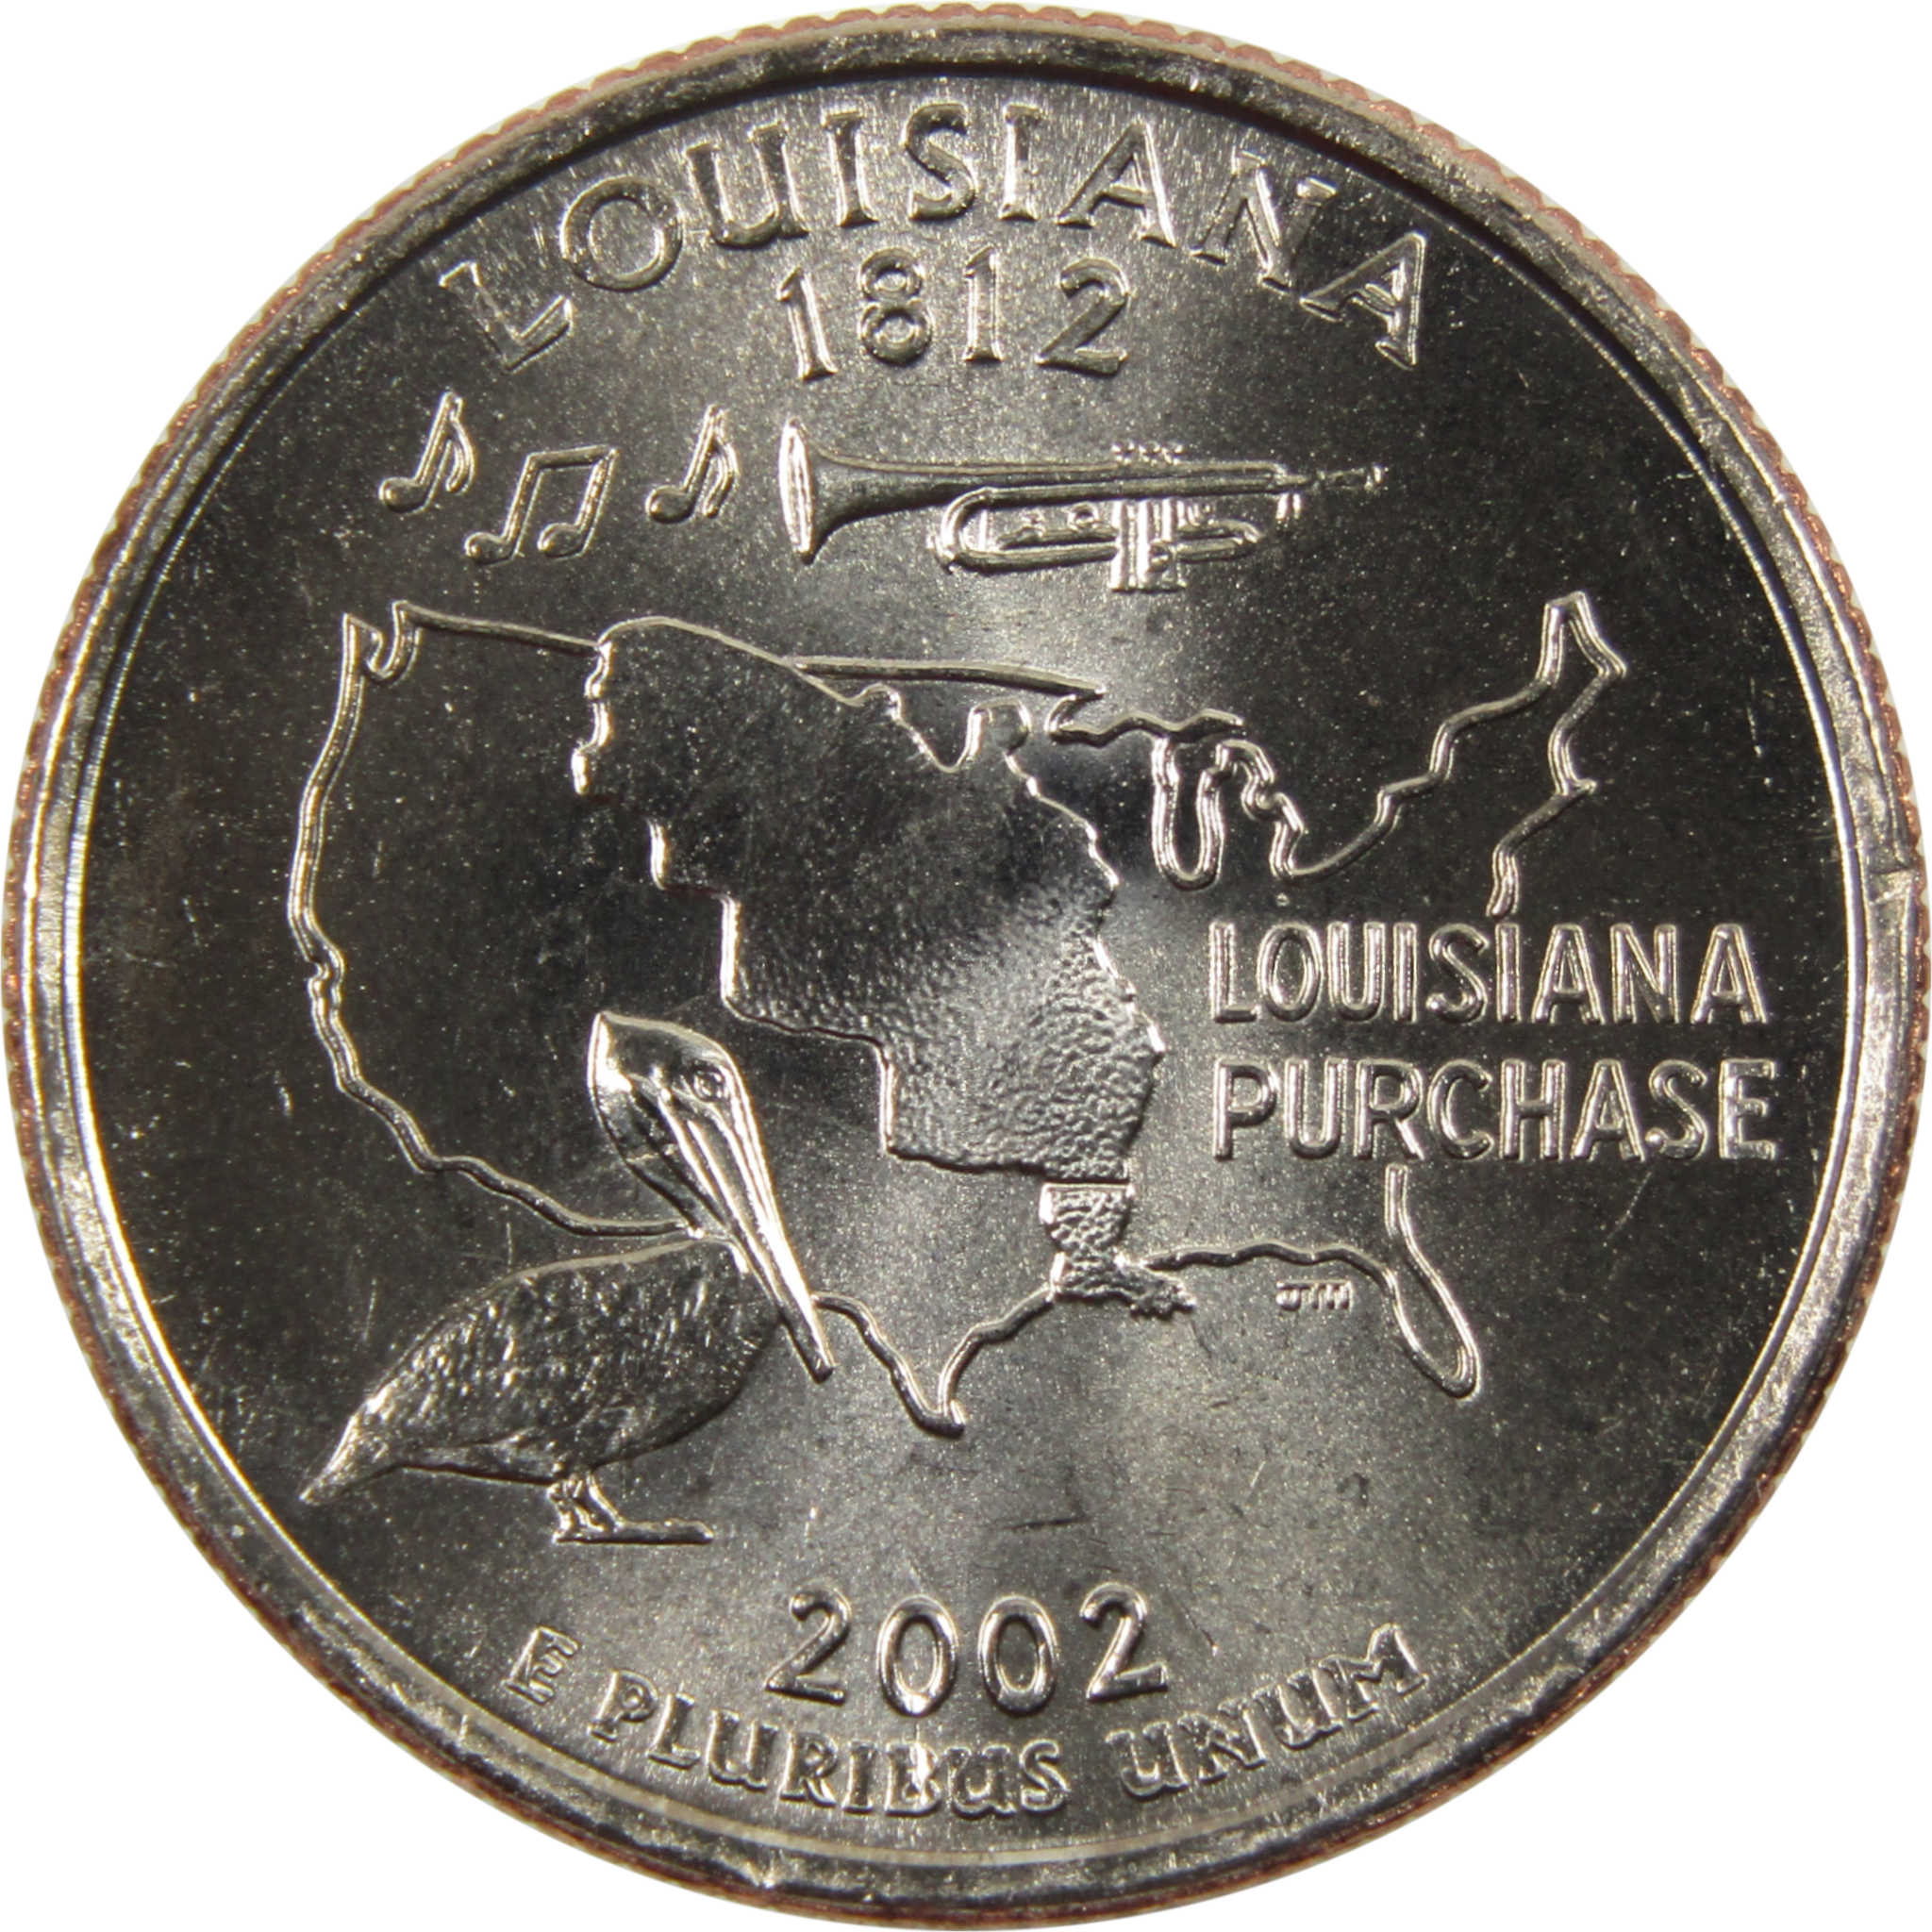 2002 P Louisiana State Quarter BU Uncirculated Clad 25c Coin